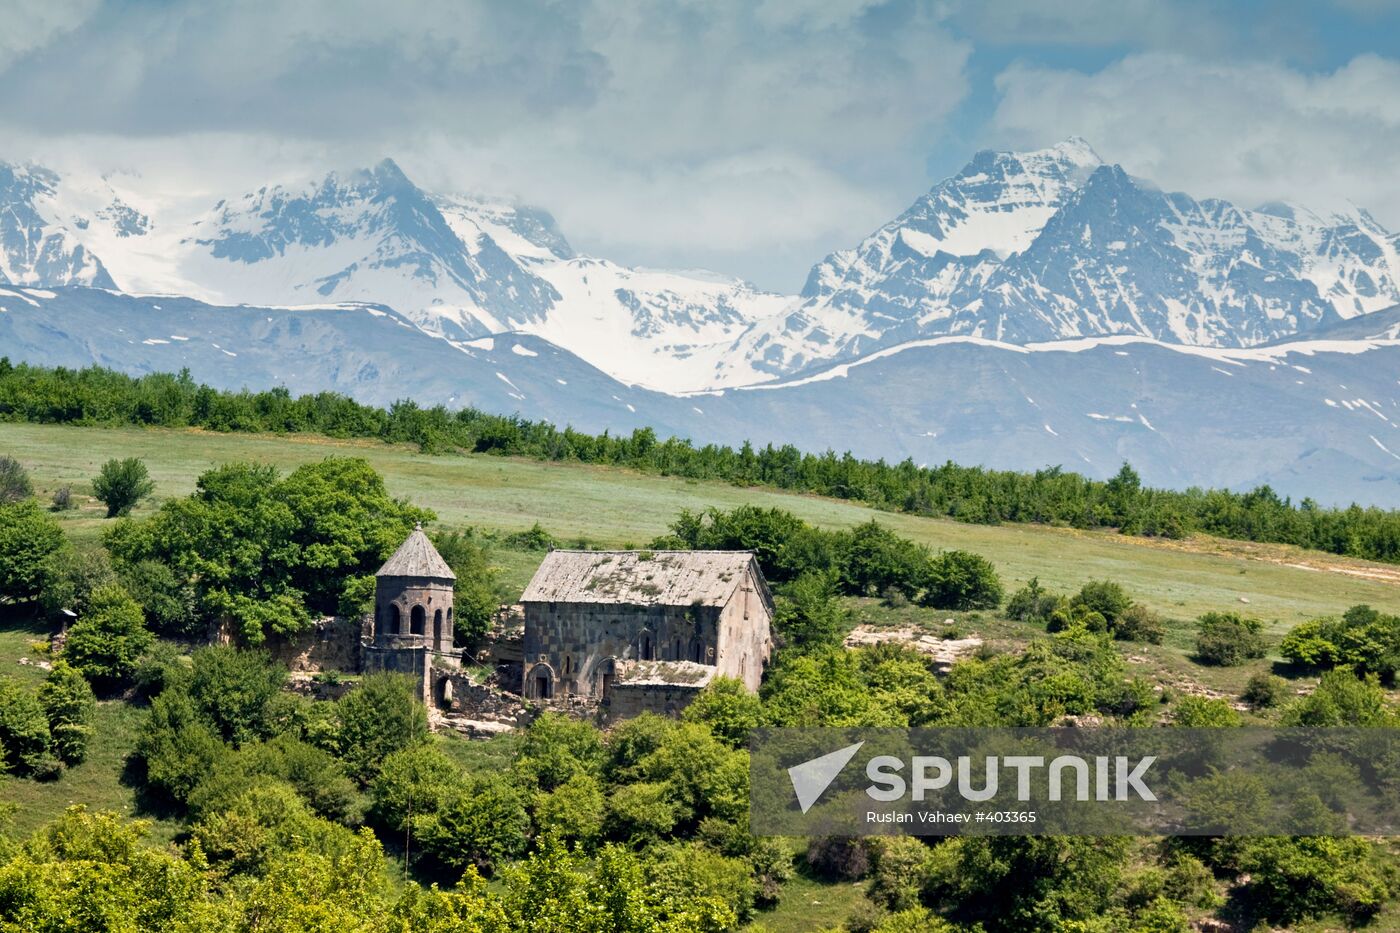 South Ossetia